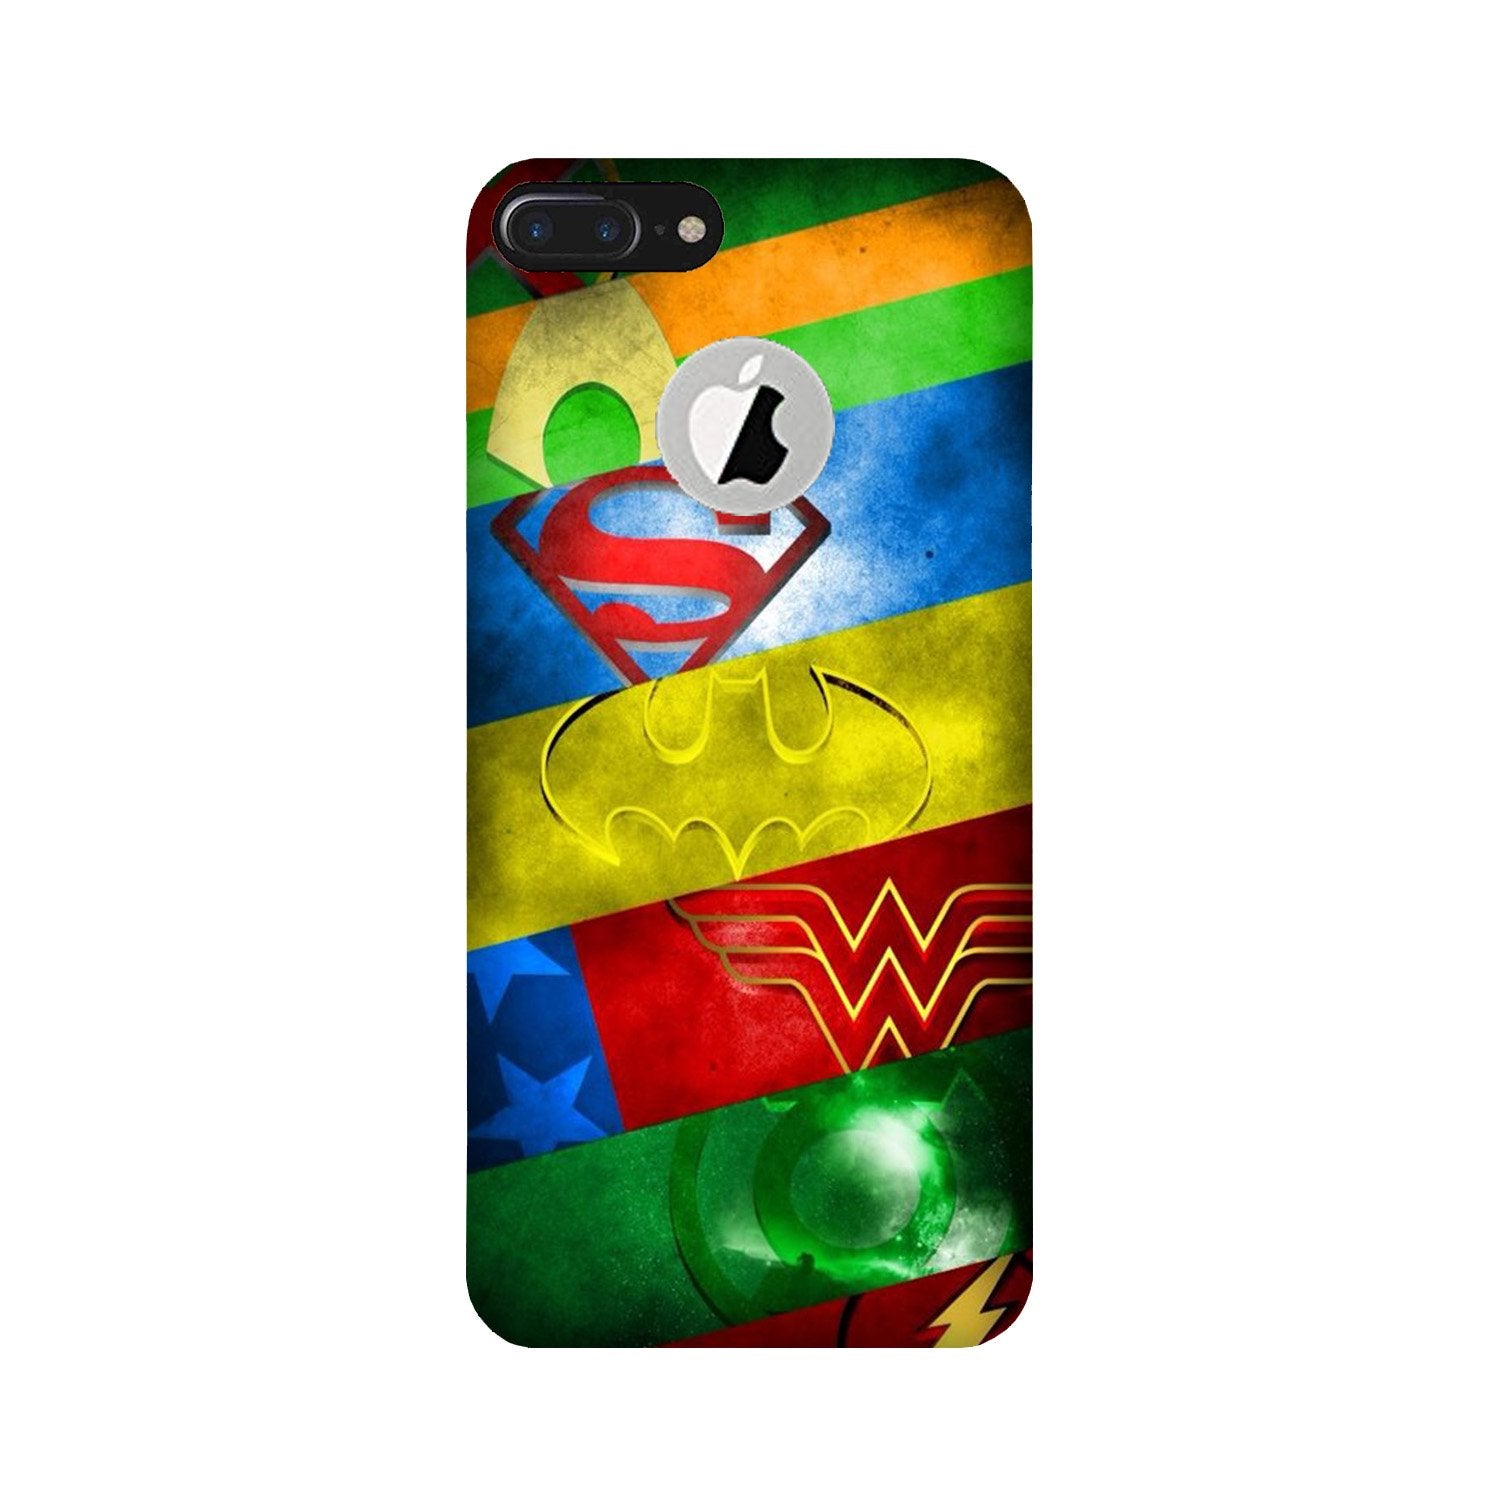 Superheros Logo Case for iPhone 7 Plus logo cut (Design No. 251)